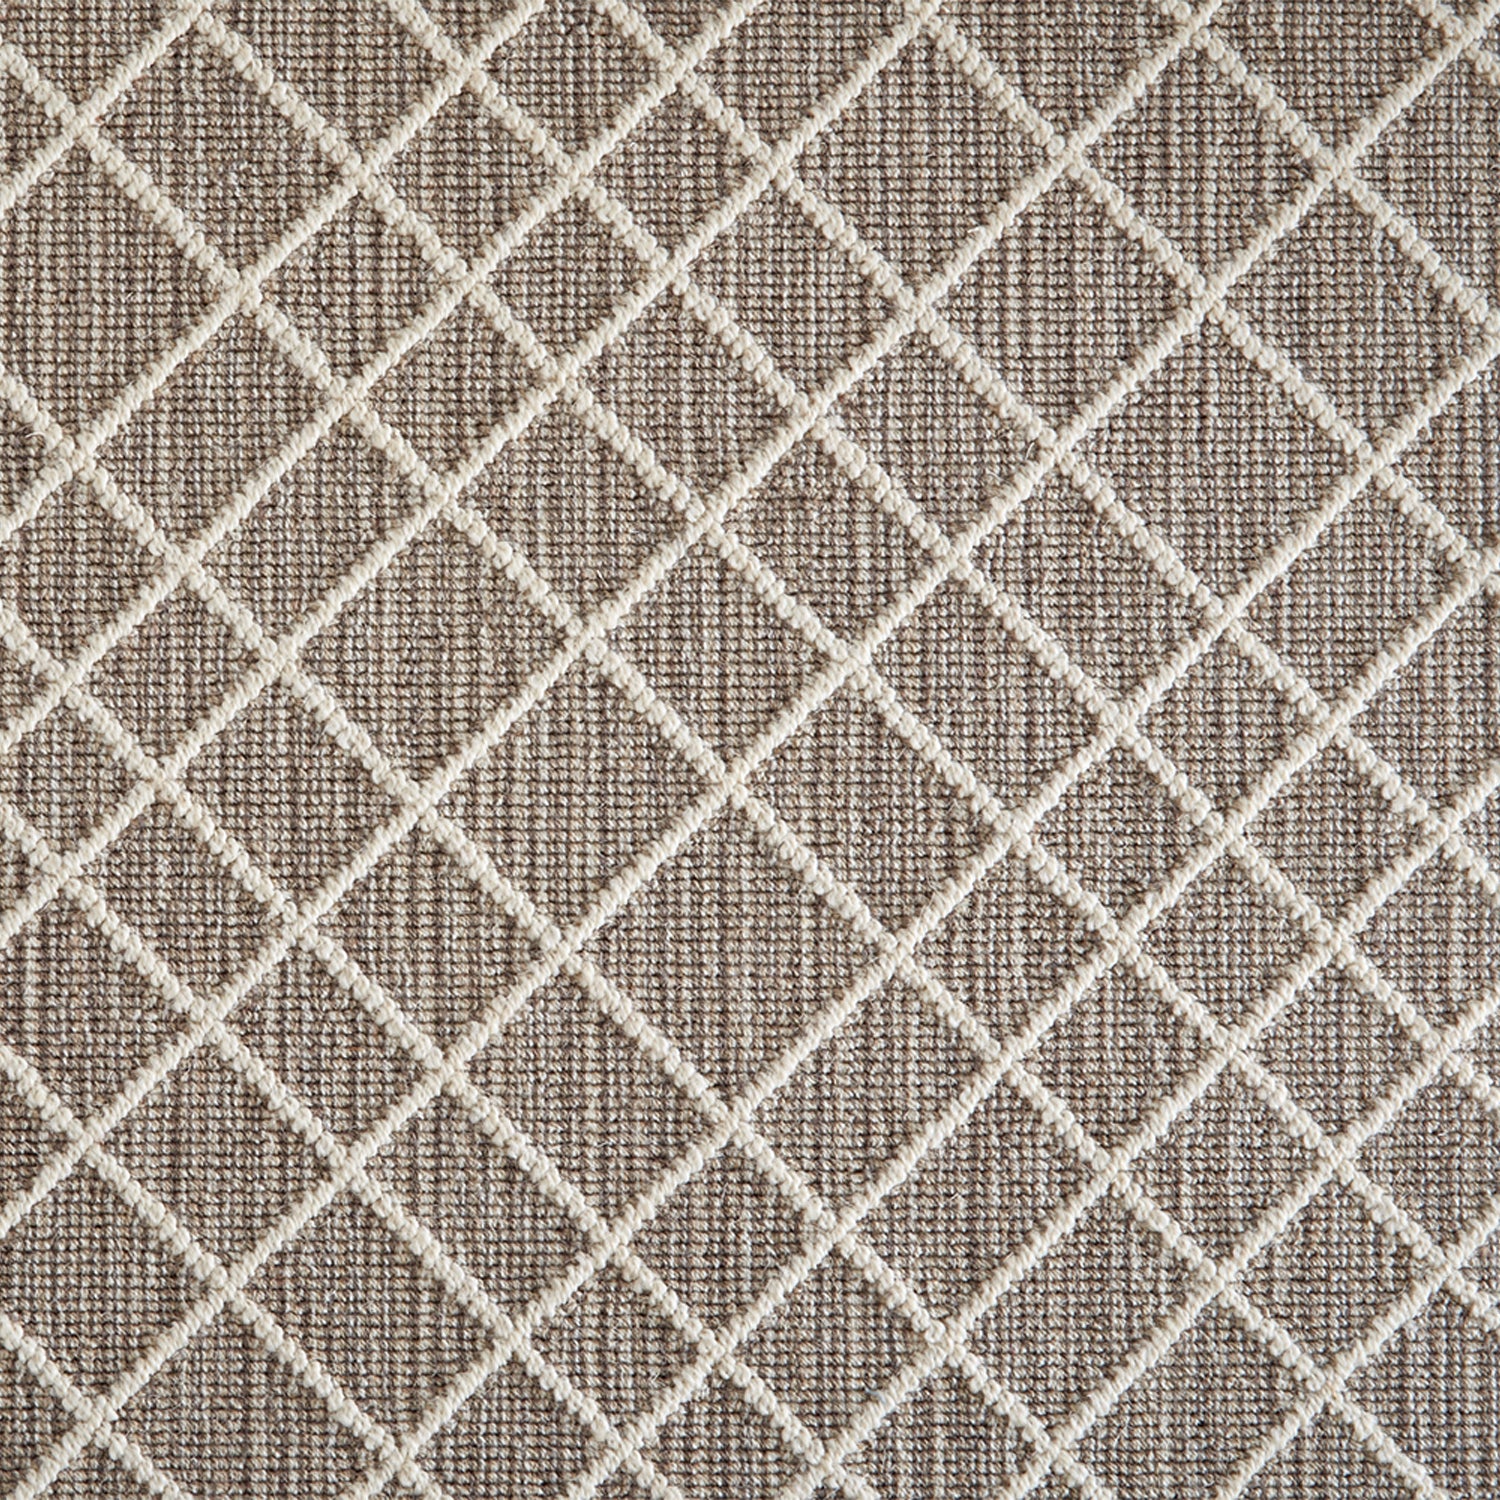 Wool-blend broadloom carpet swatch in a dimensional lattice print in cream on a mottled brown field.